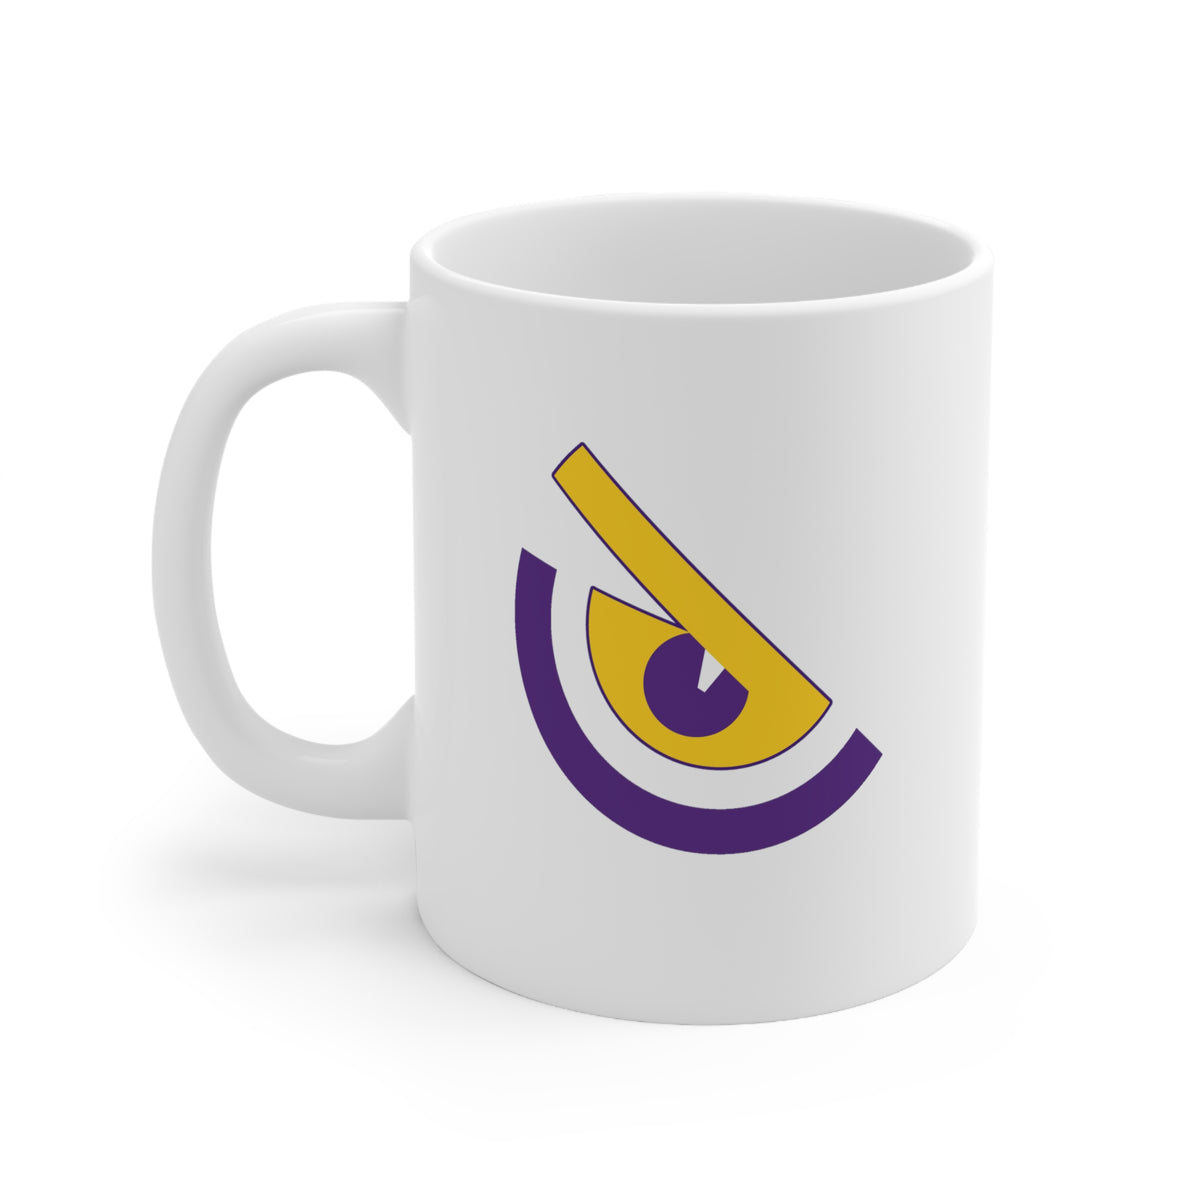 Eyeball Gift, Eyeball Mug, Eyeball Coffee Cup, Unique Coffee Mug